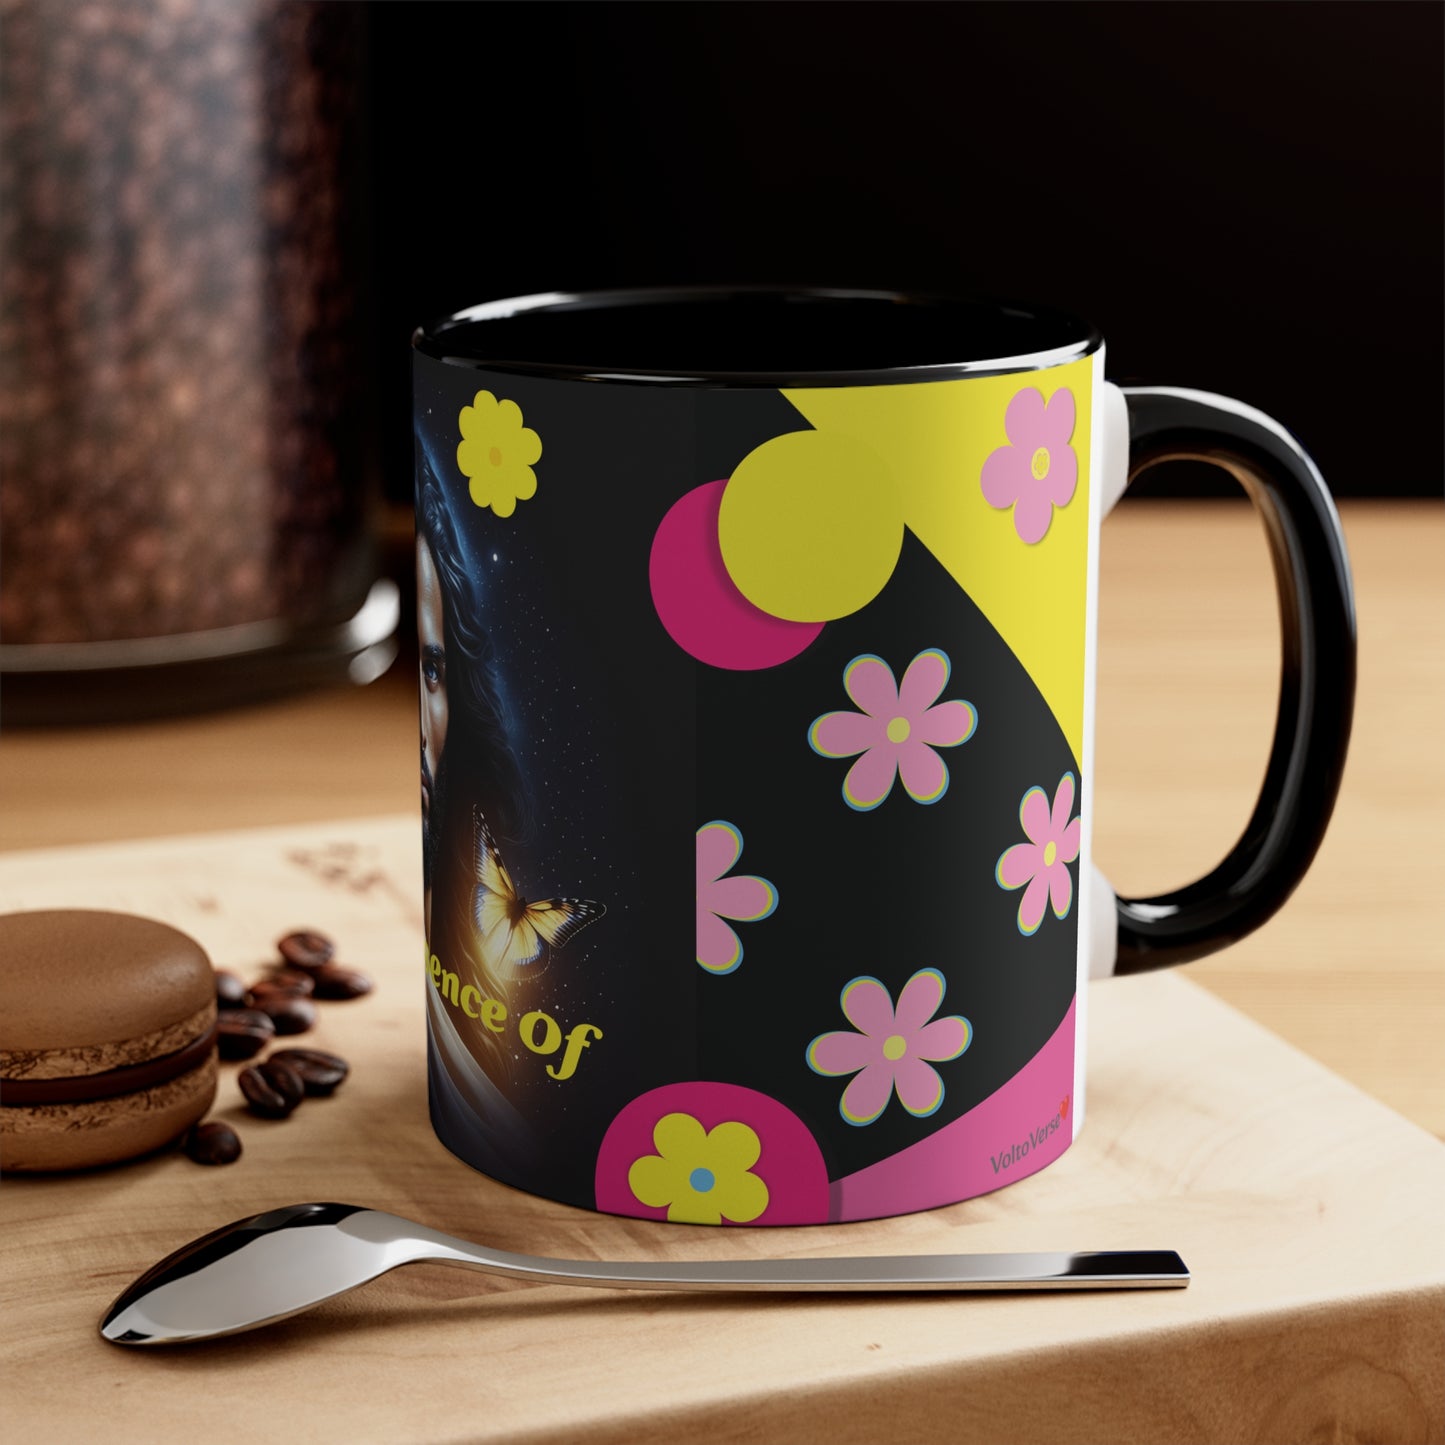 Radiance" Coffee Mug.